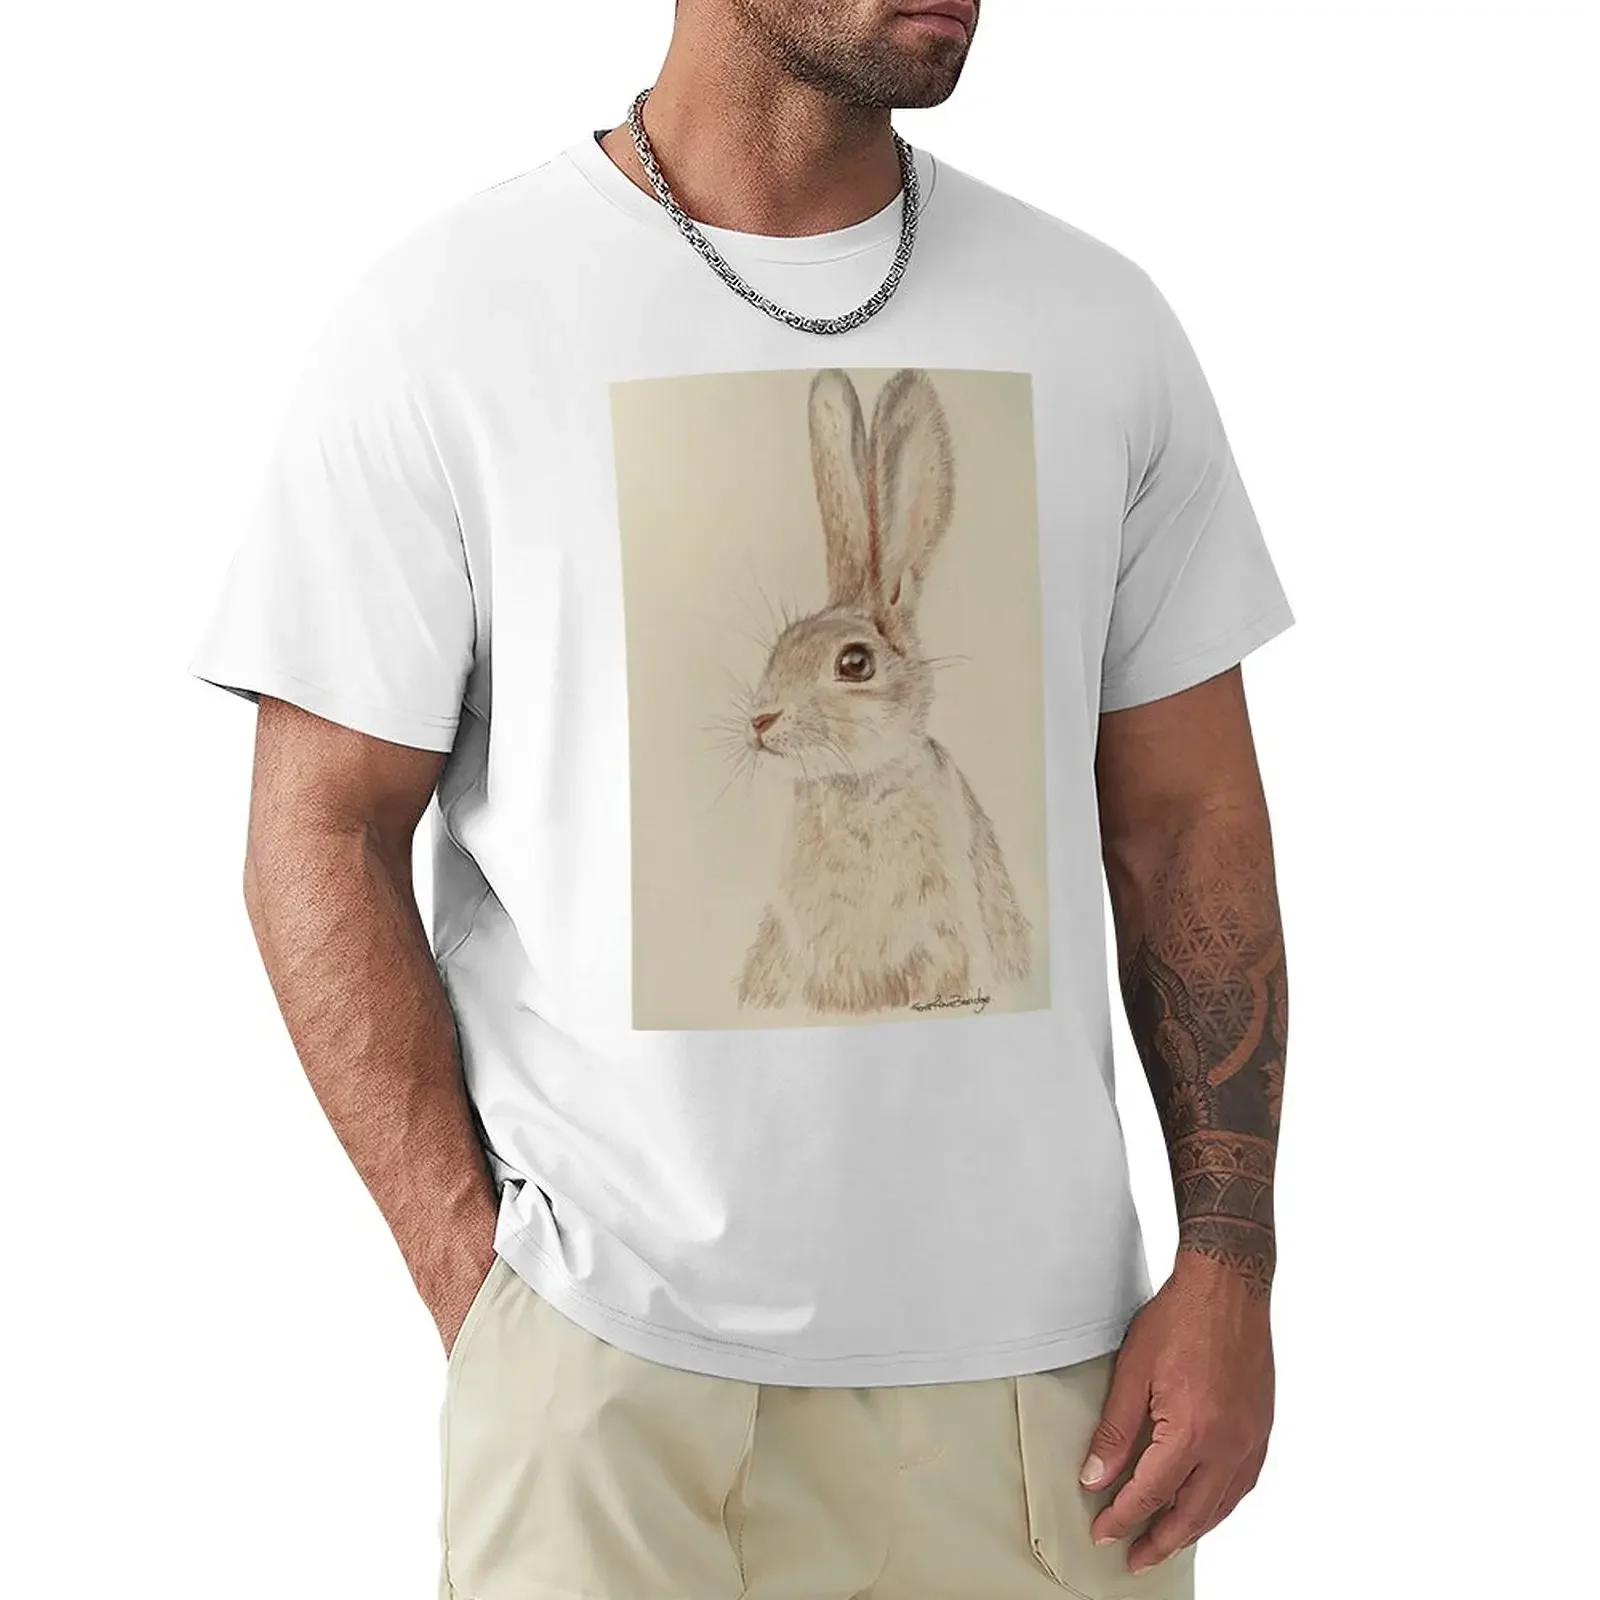 

Hare T-Shirt summer top cute clothes Anime t-shirt shirts graphic tees mens plain t shirts